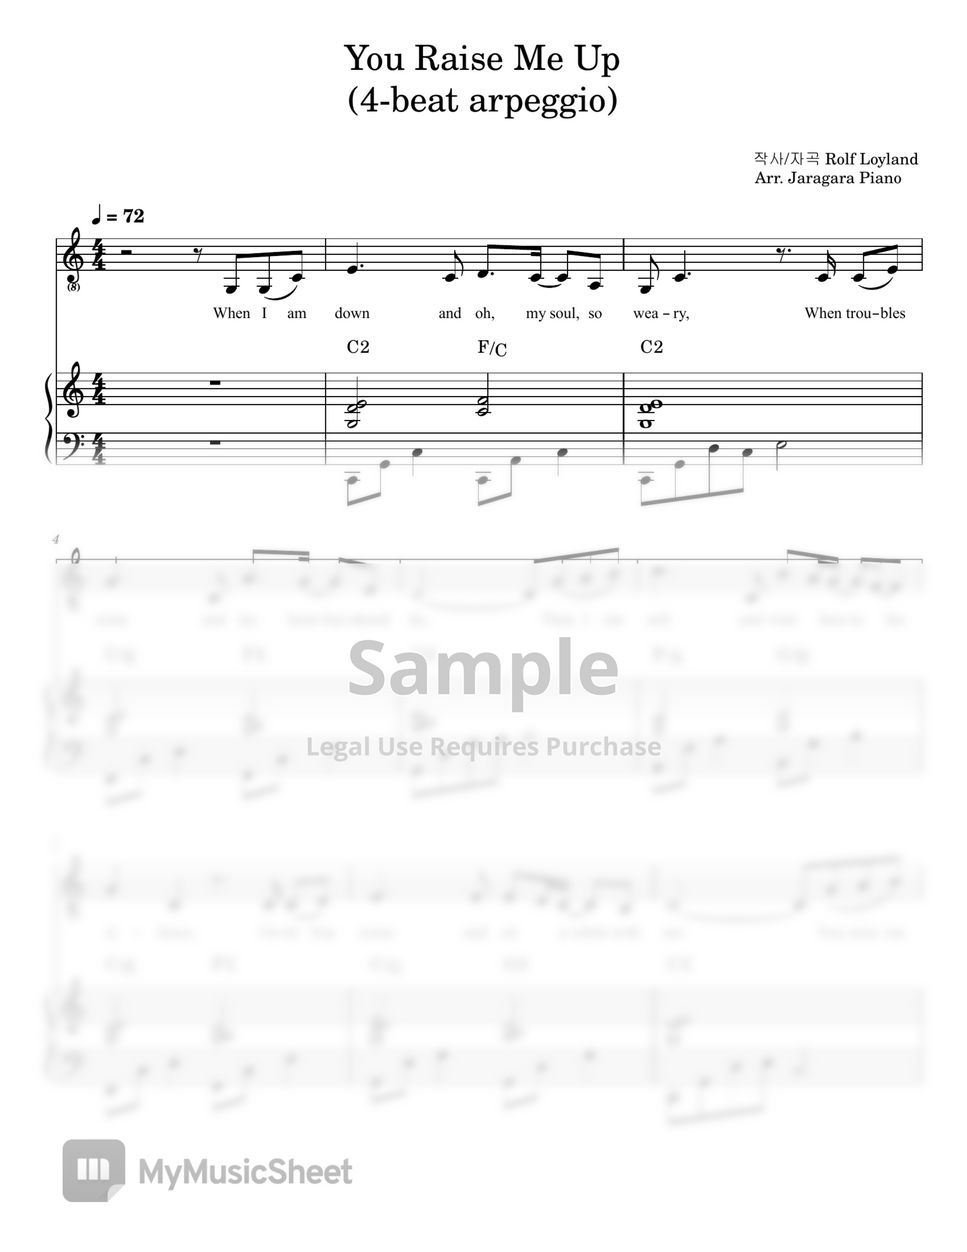 Rolf Loyland - Rolf Loyland - You Raise Me Up (반주 악보) by Jaragara Piano